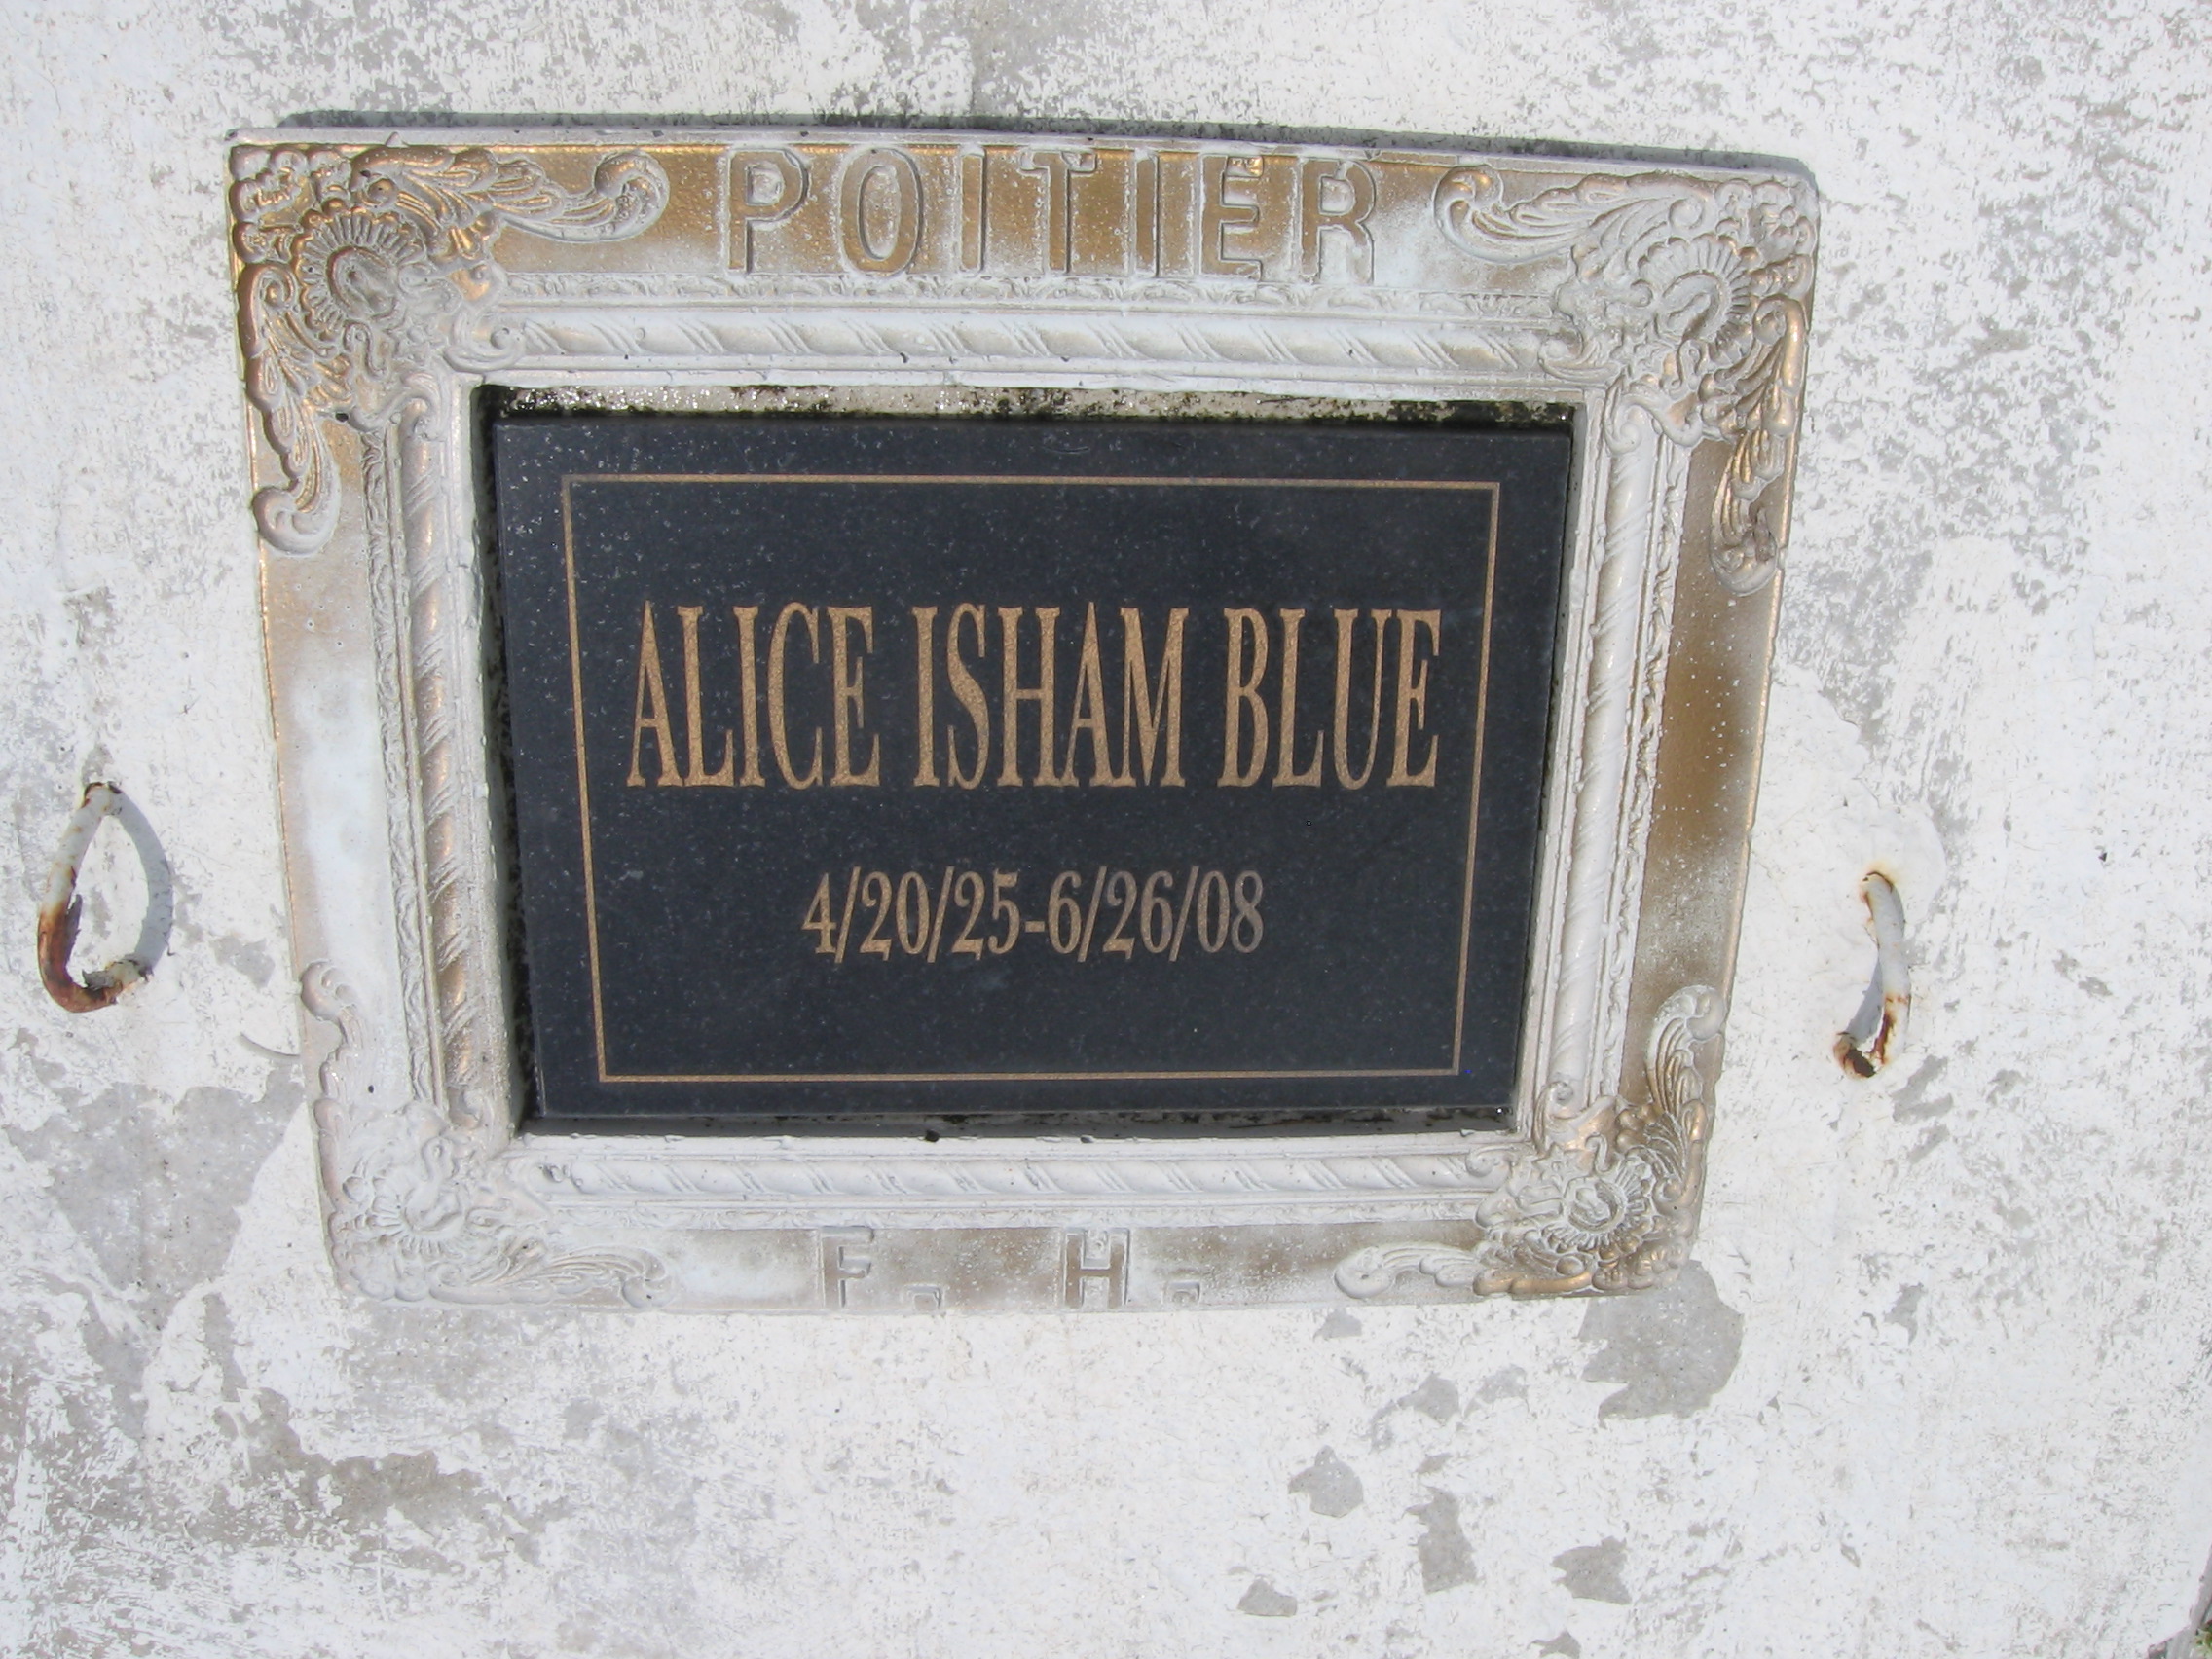 Alice Isham Blue